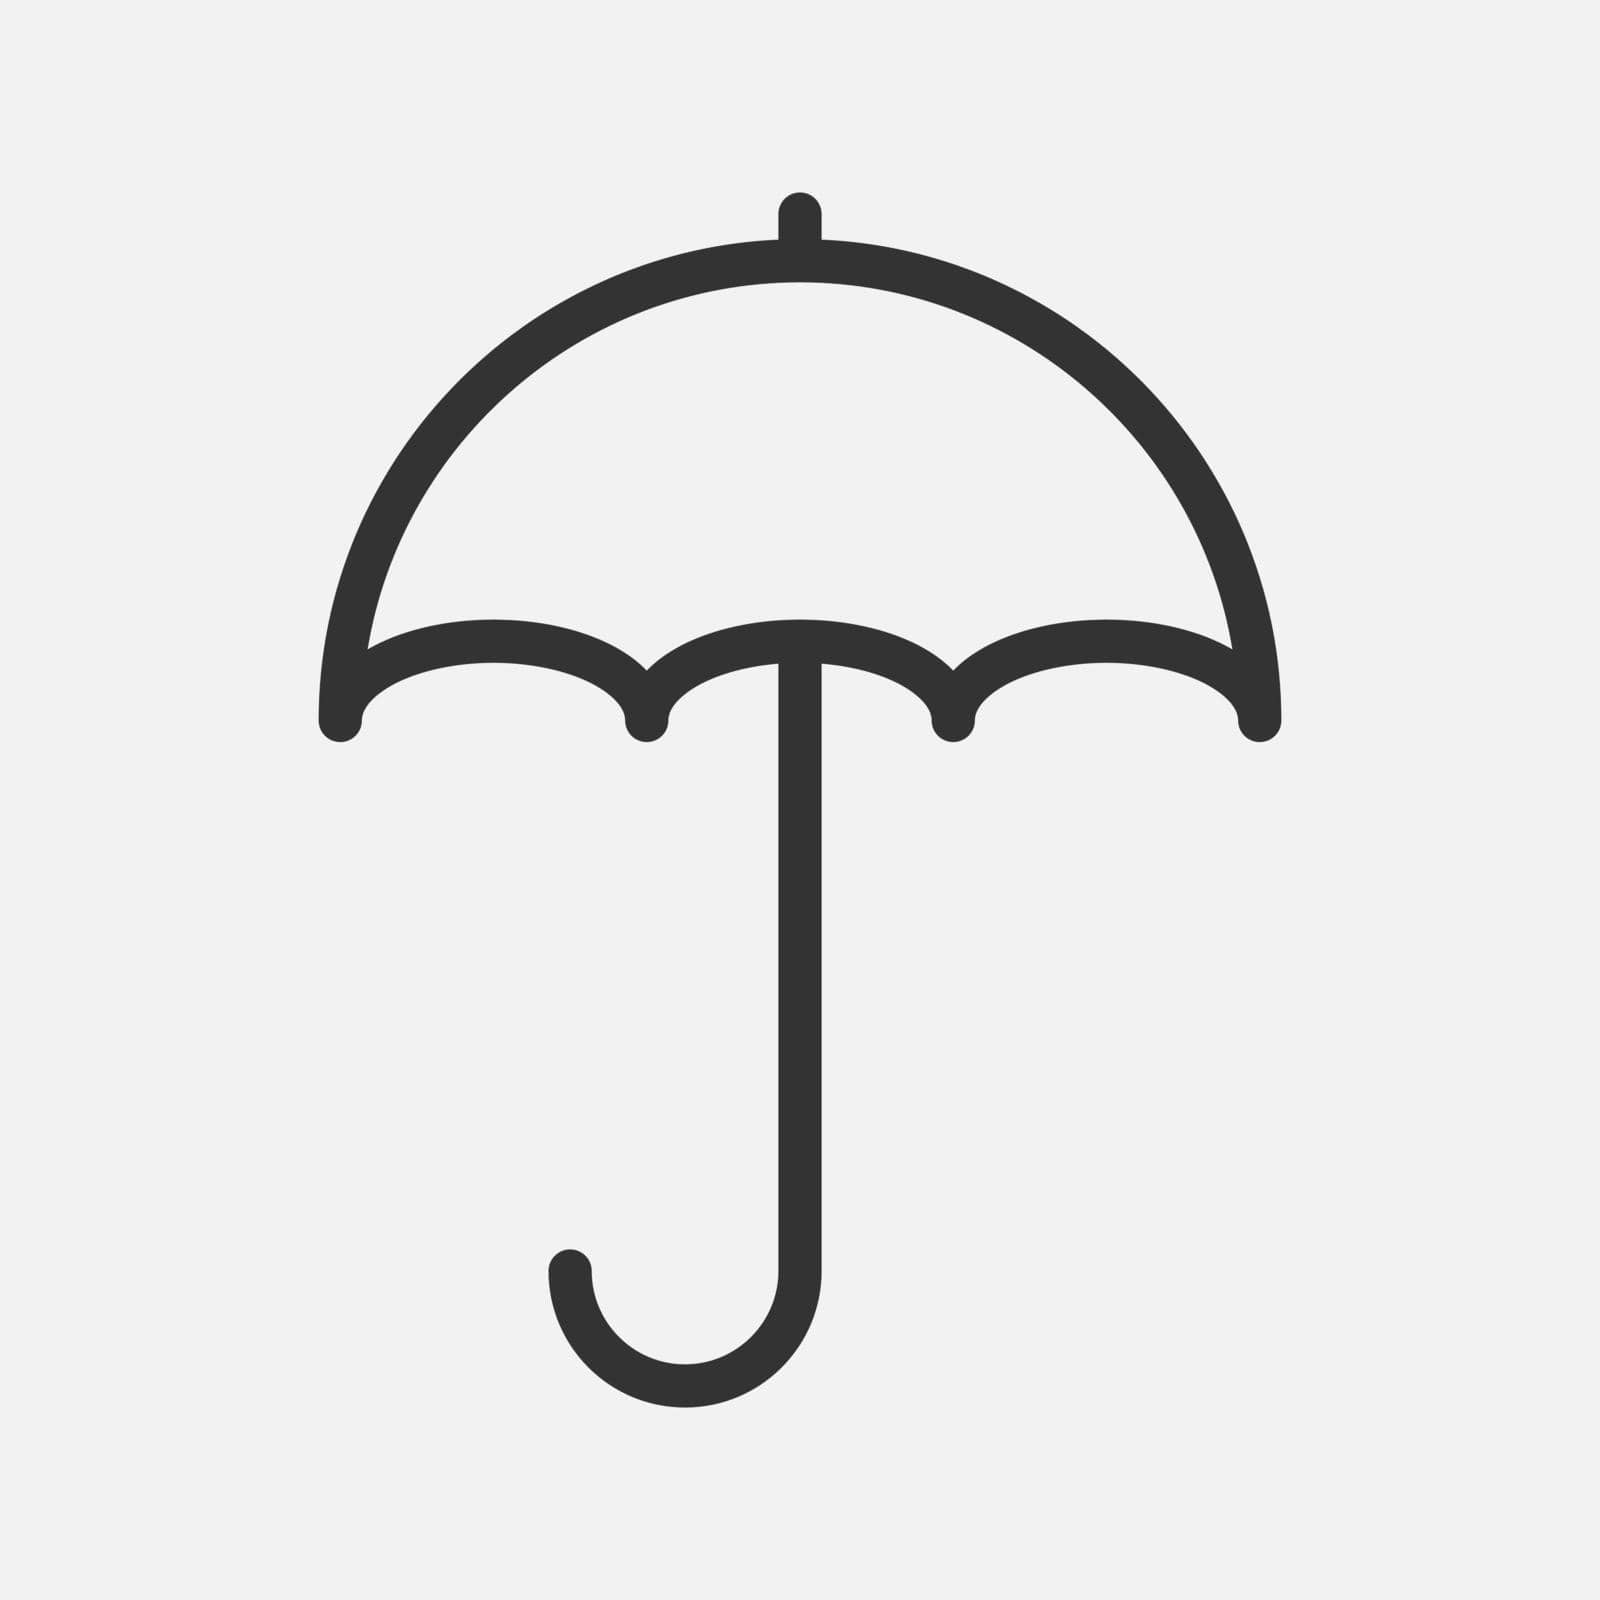 Umbrella line vector icon isolated on white background.